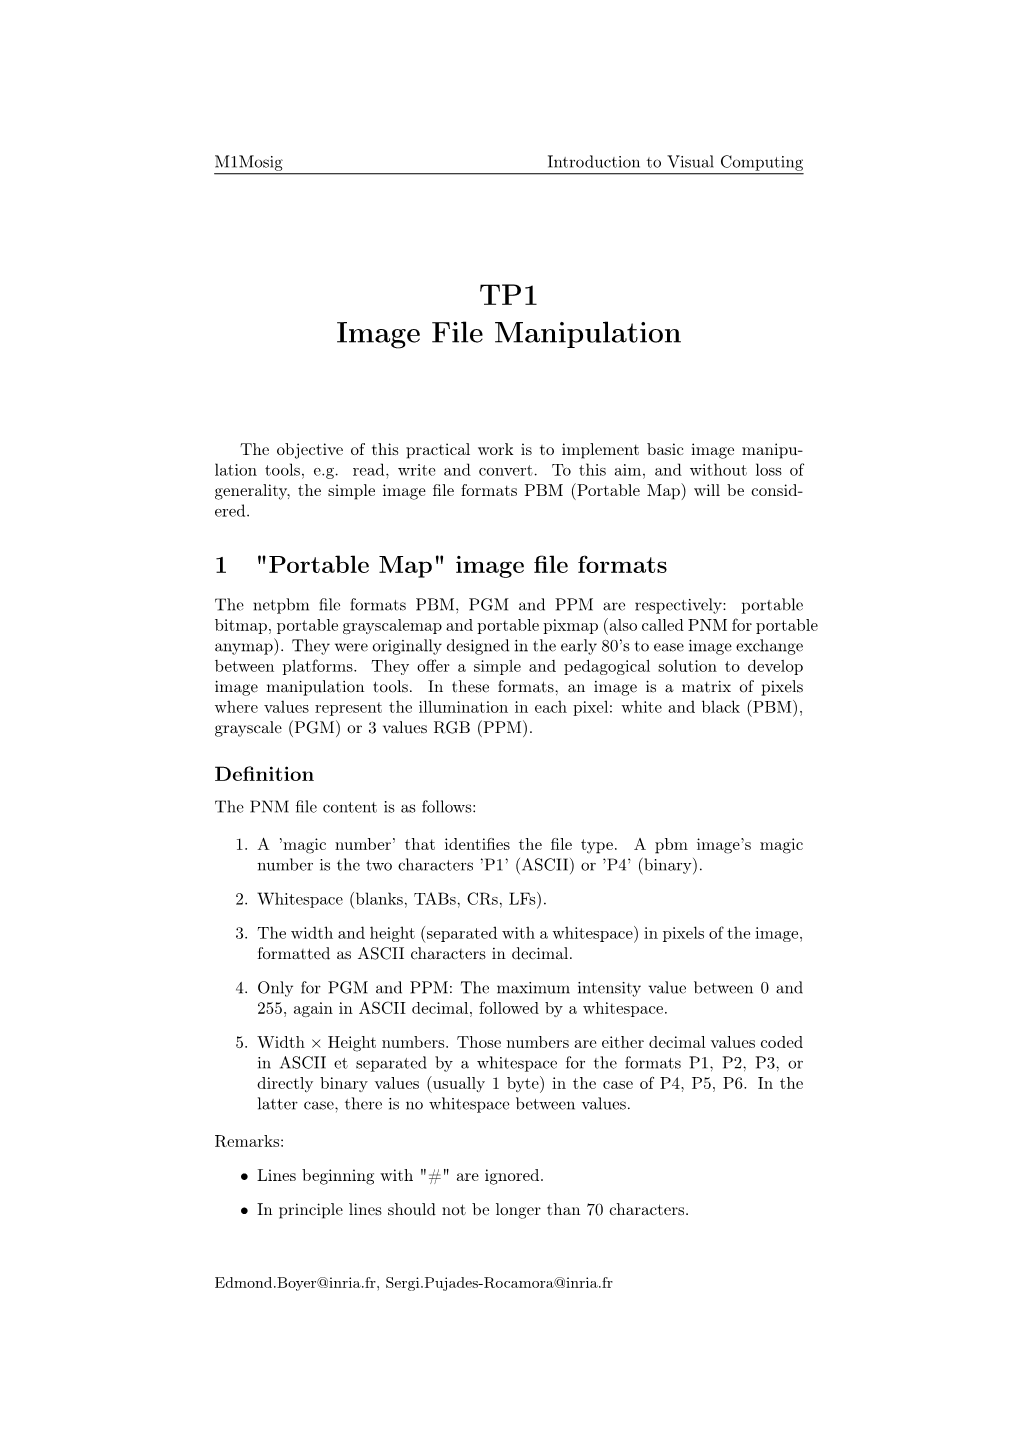 TP1 Image File Manipulation